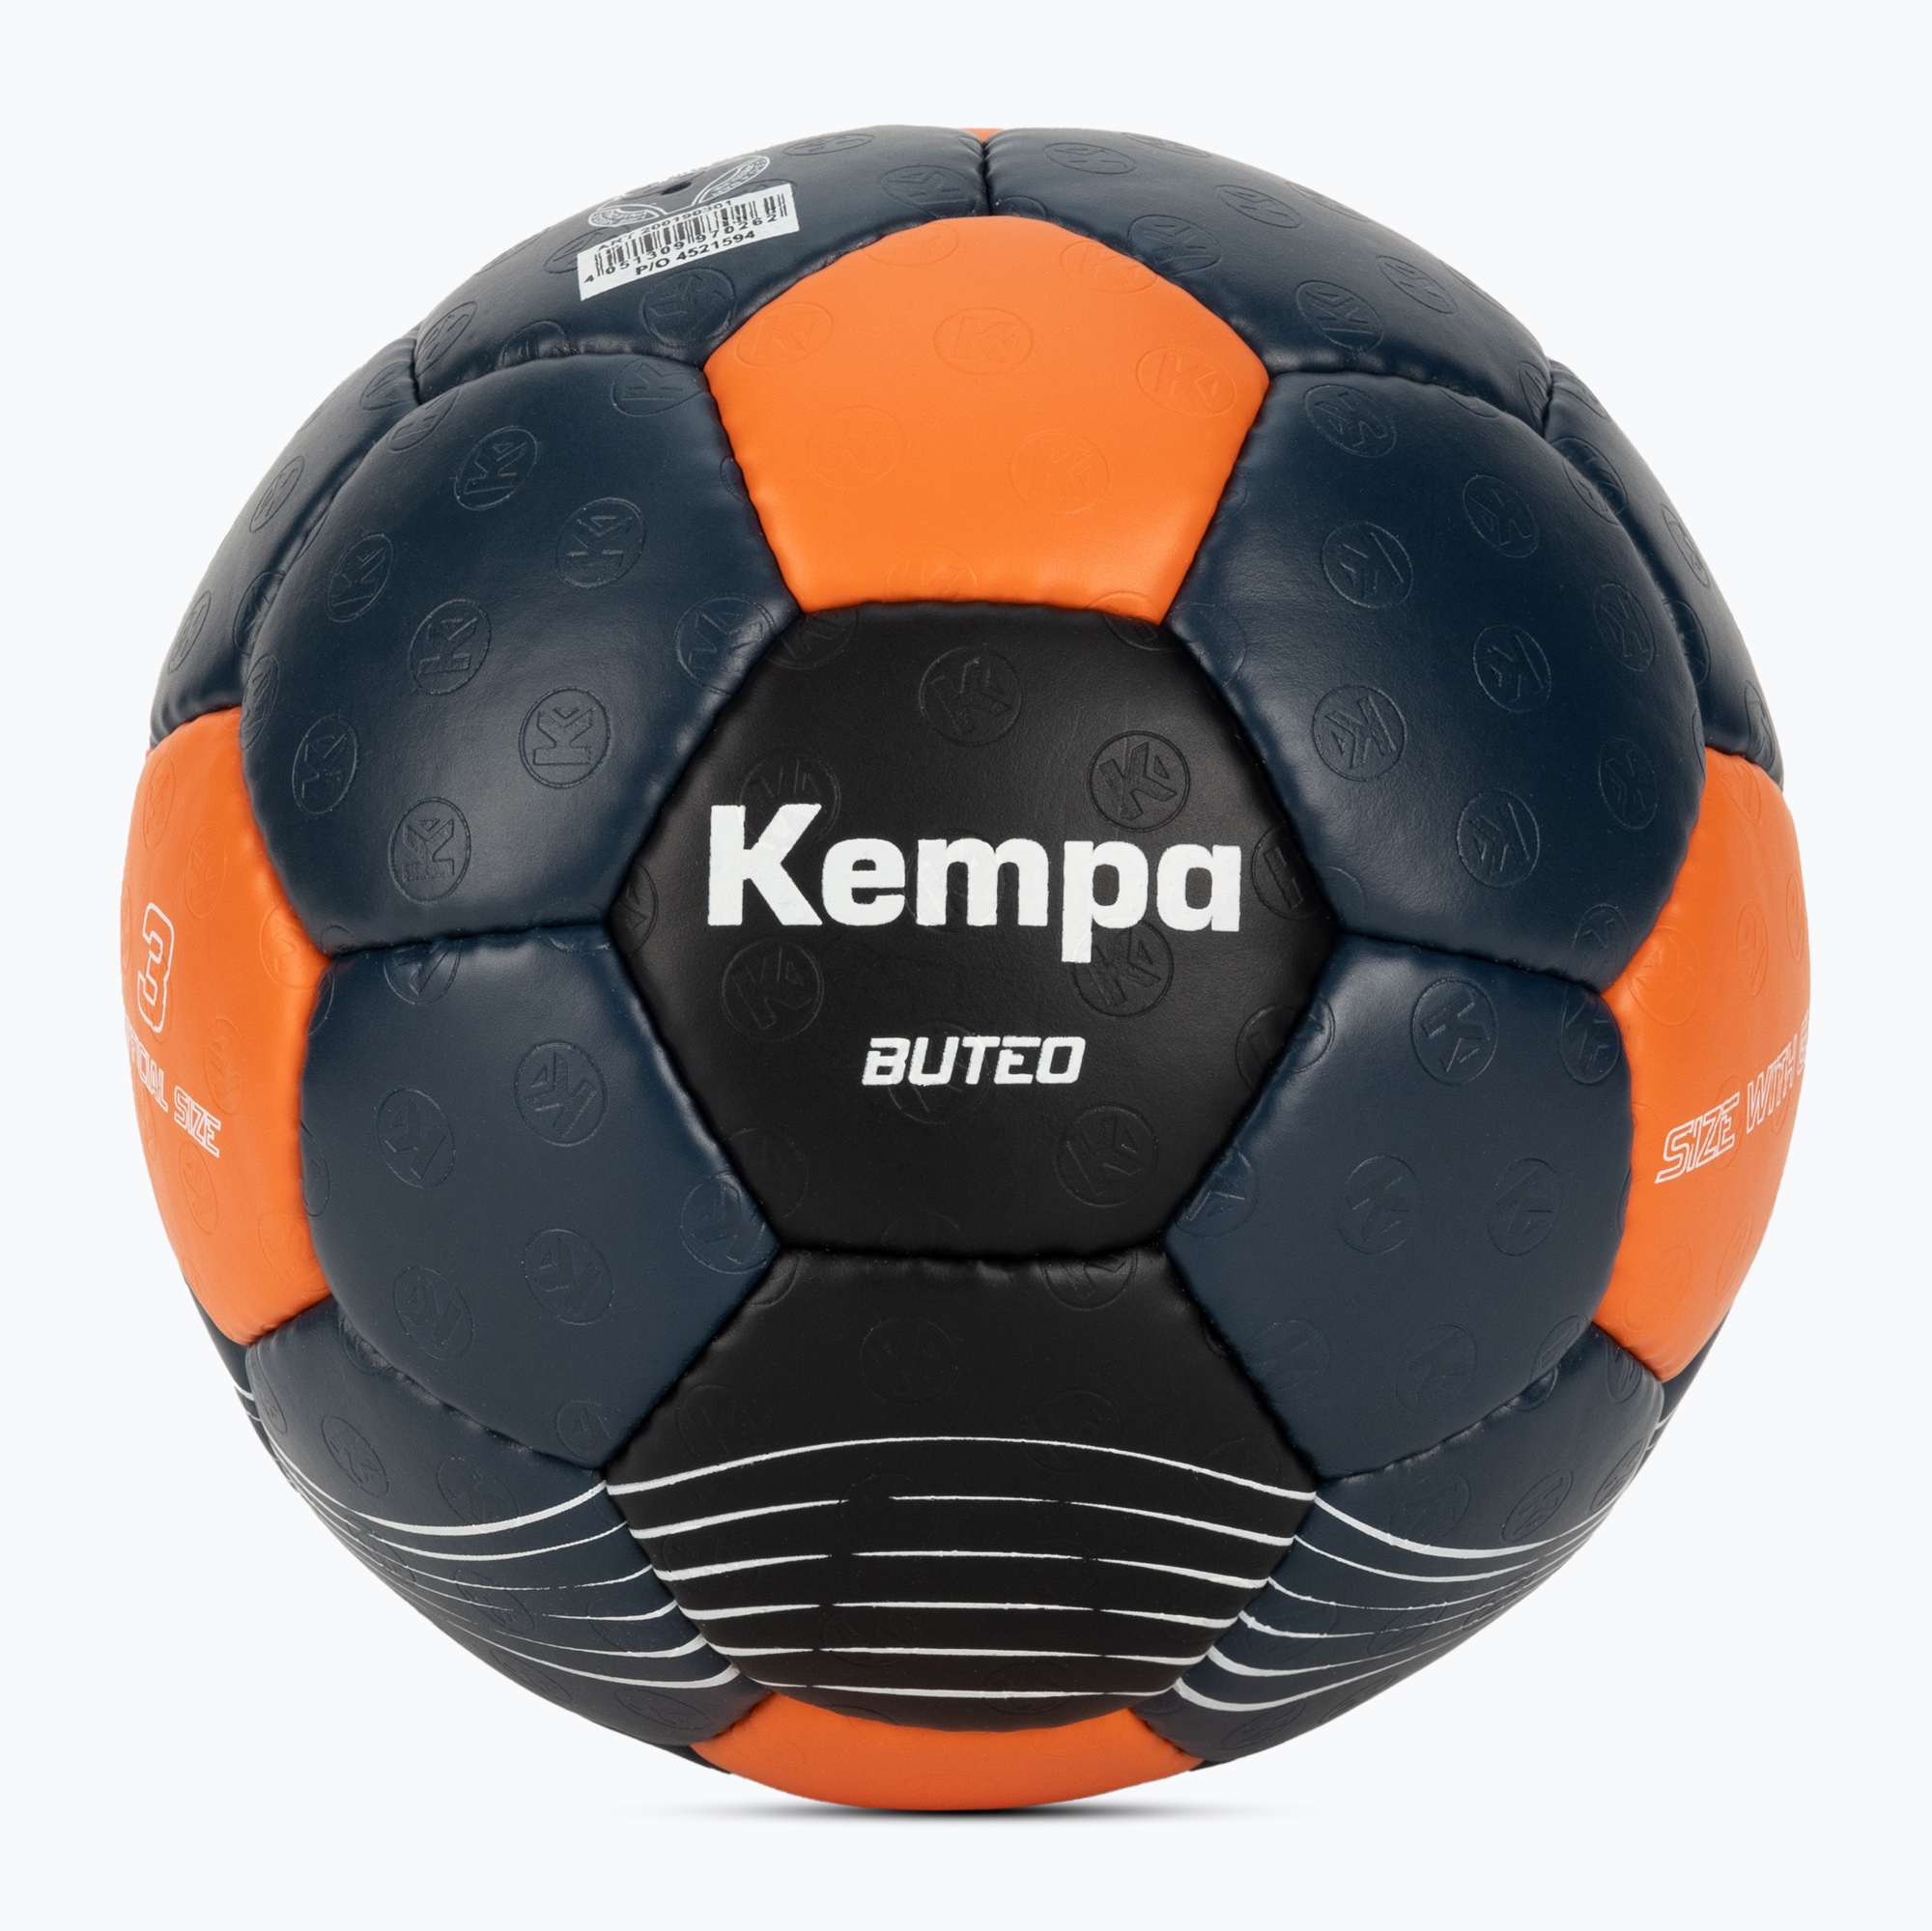 Kempa Buteo хандбална топка 200190301/3 размер 3